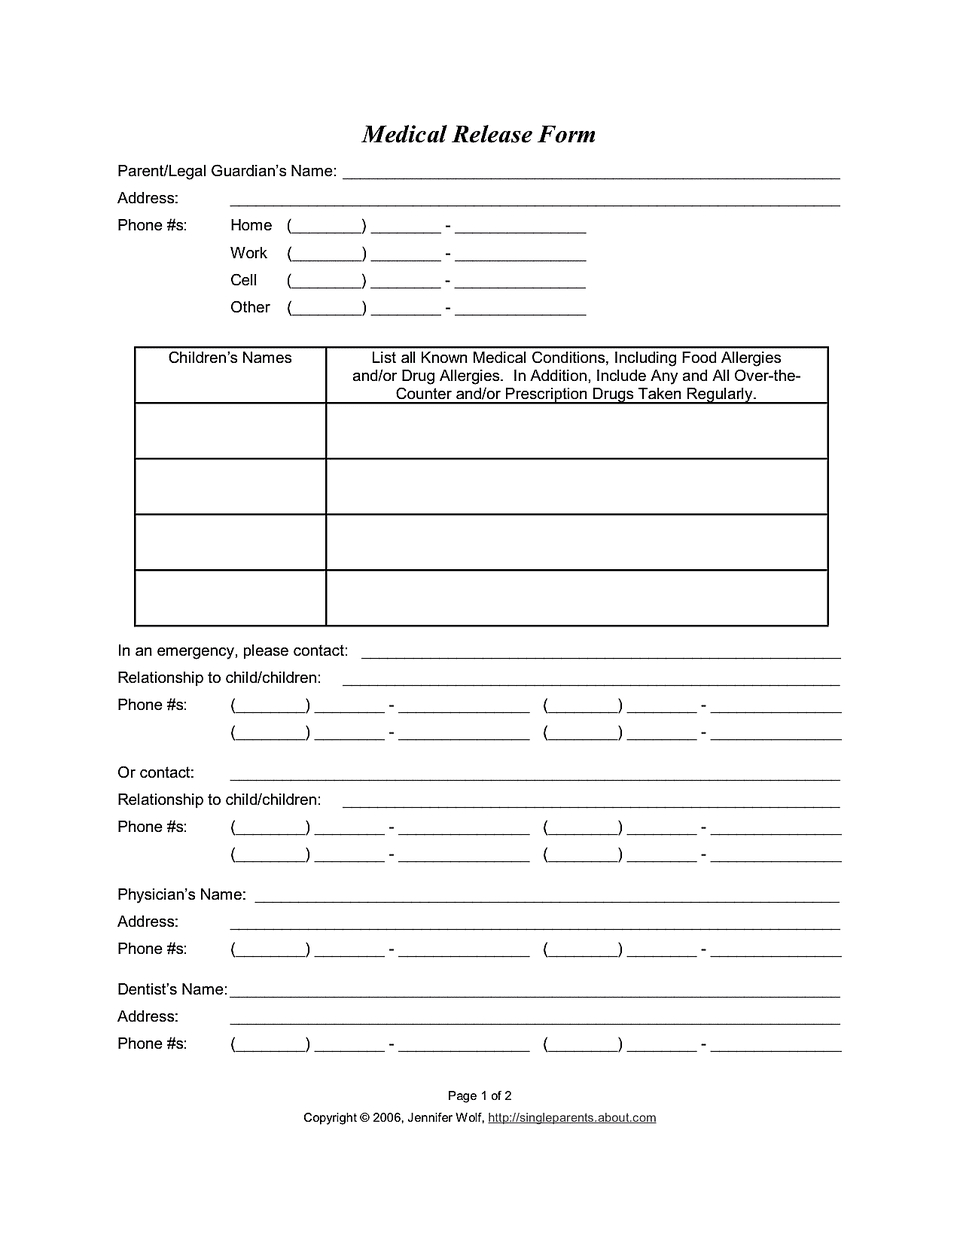 Medical Release Form For - Free Printable Medical Release Form